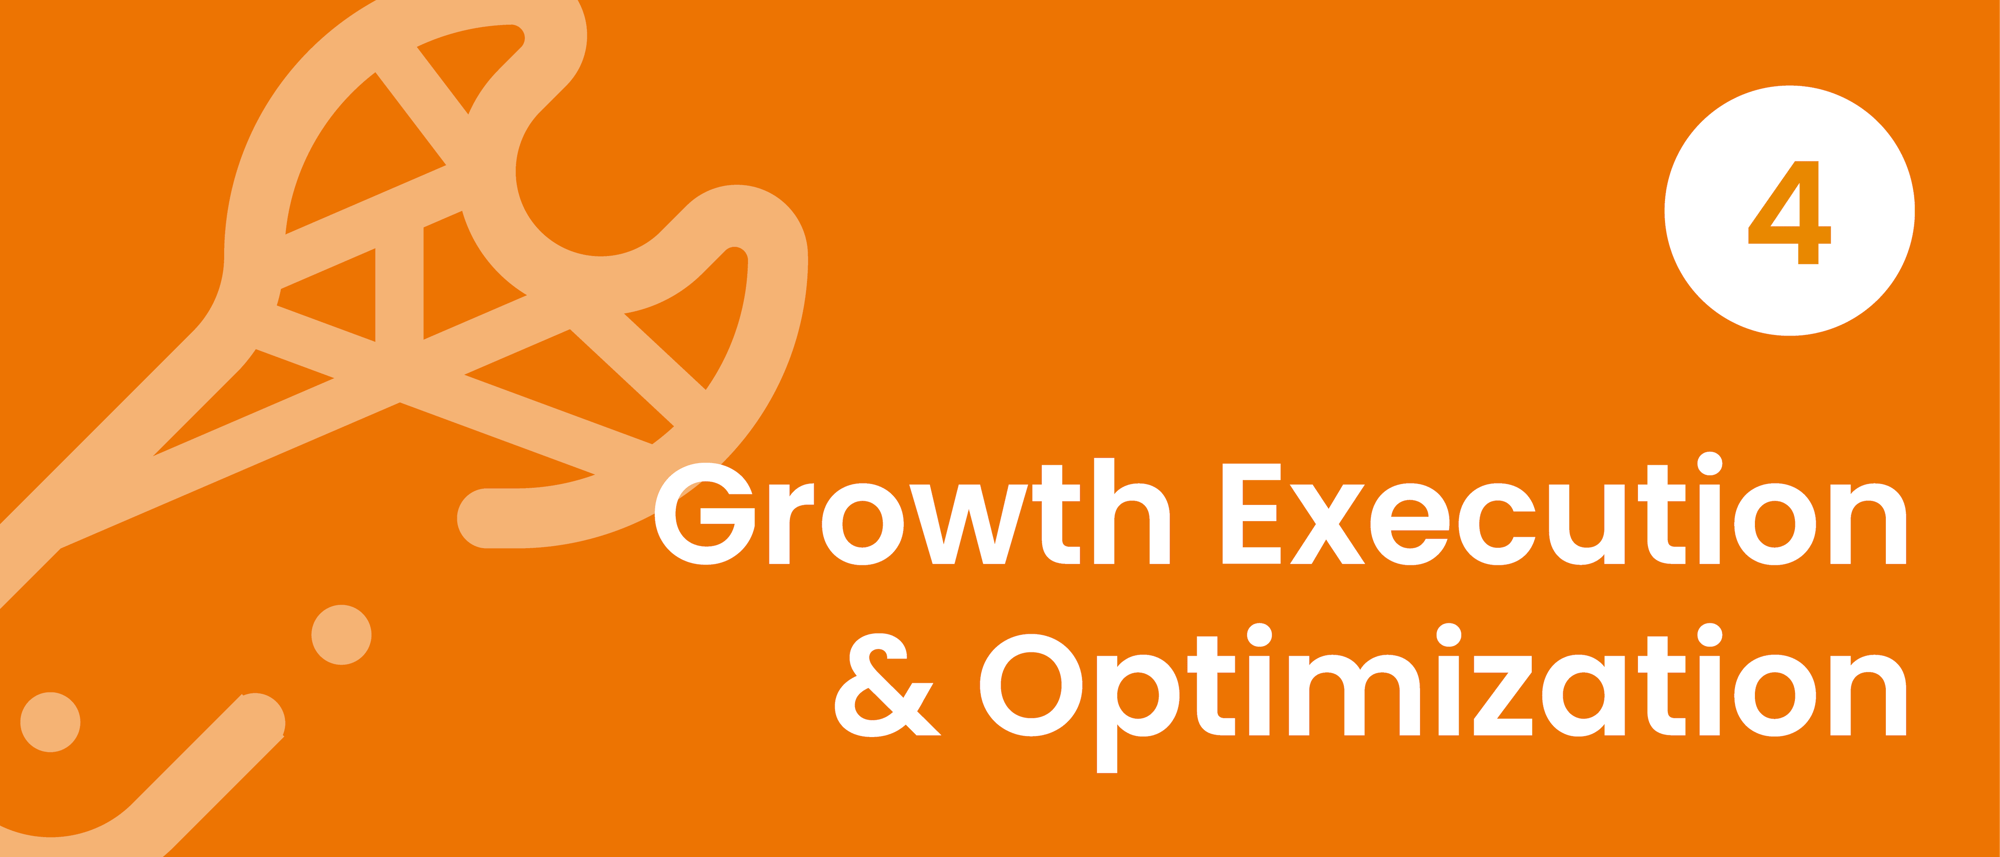 630 - Web - Founder_Growth Execution Optmization - Timeline - 4